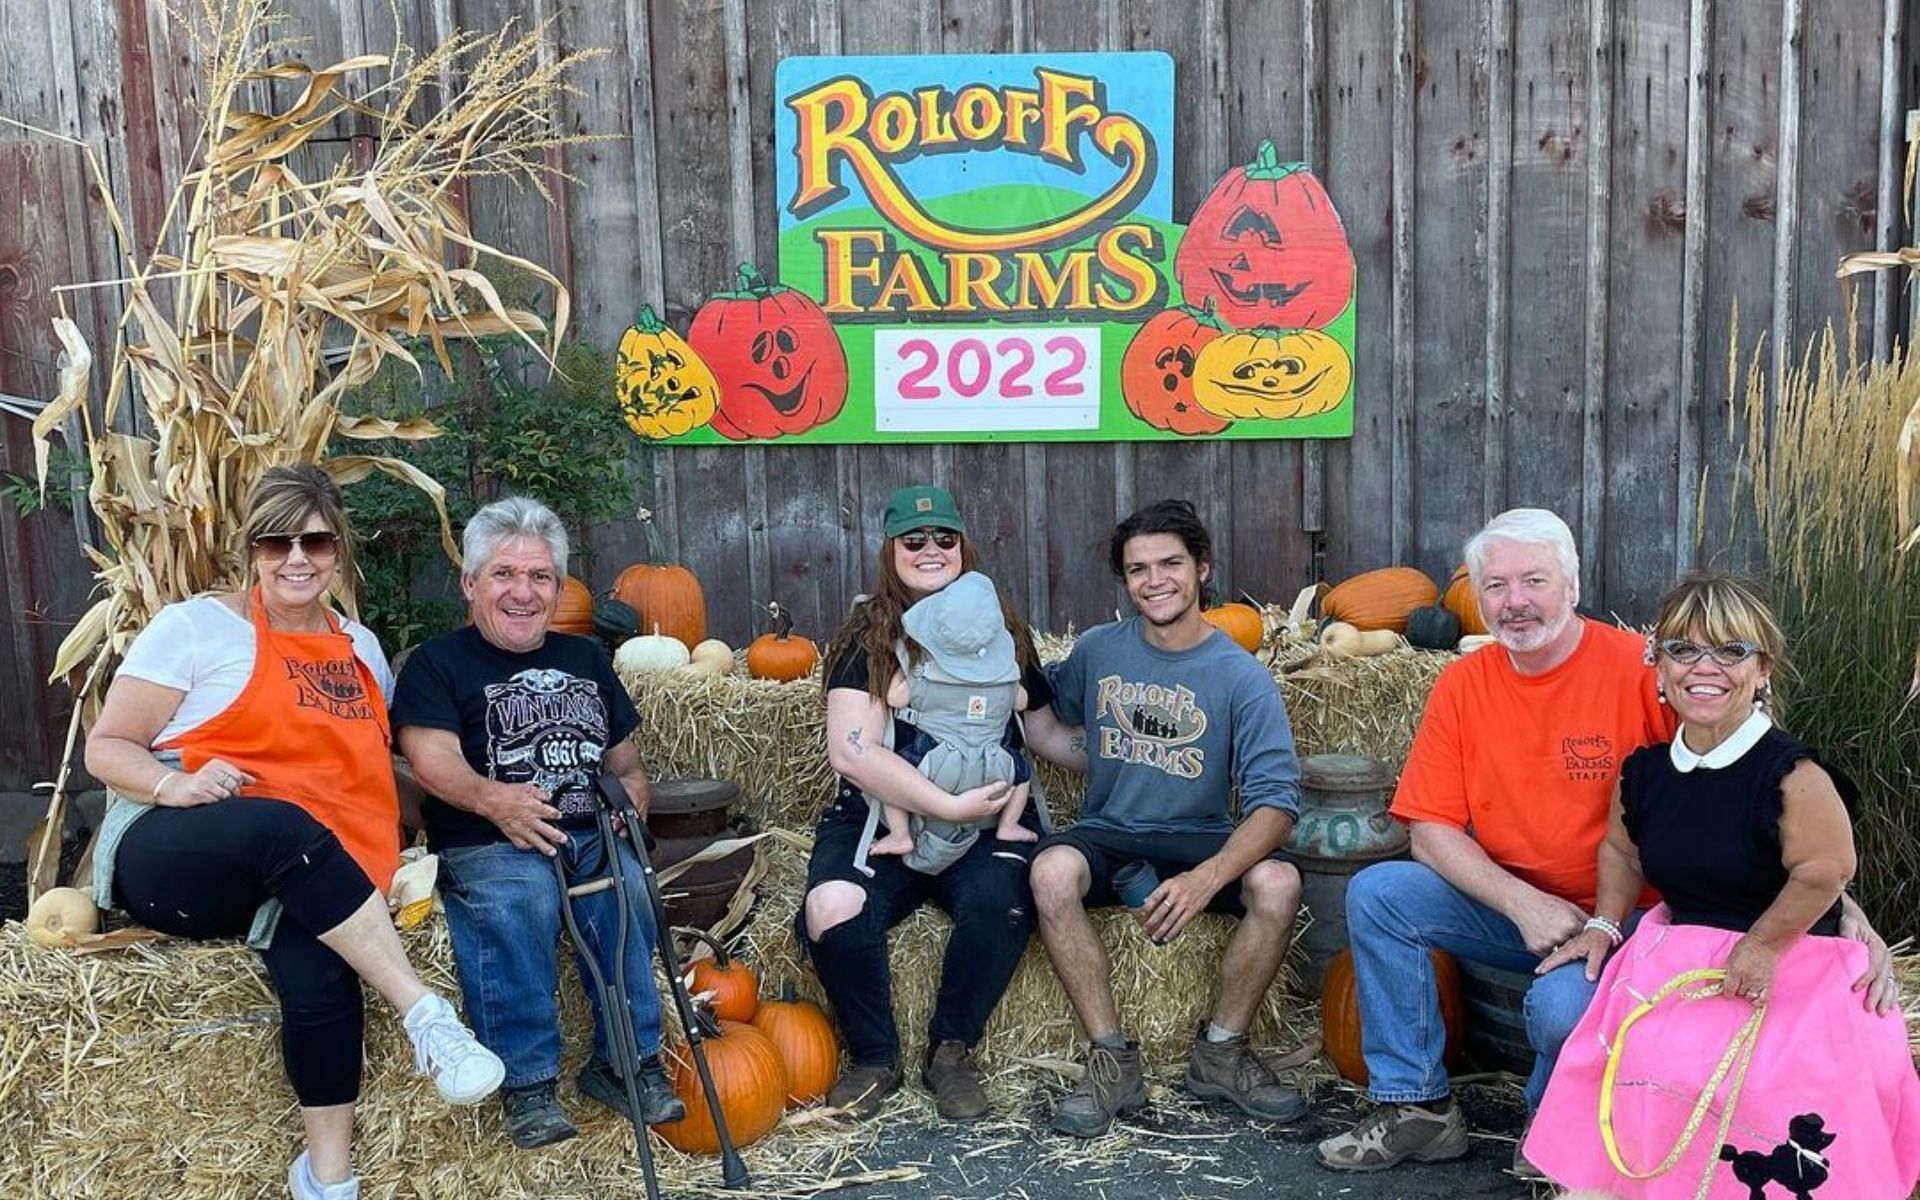 Will the Roloff children return to the family farm? (Image via mattroloff/ Instagram)